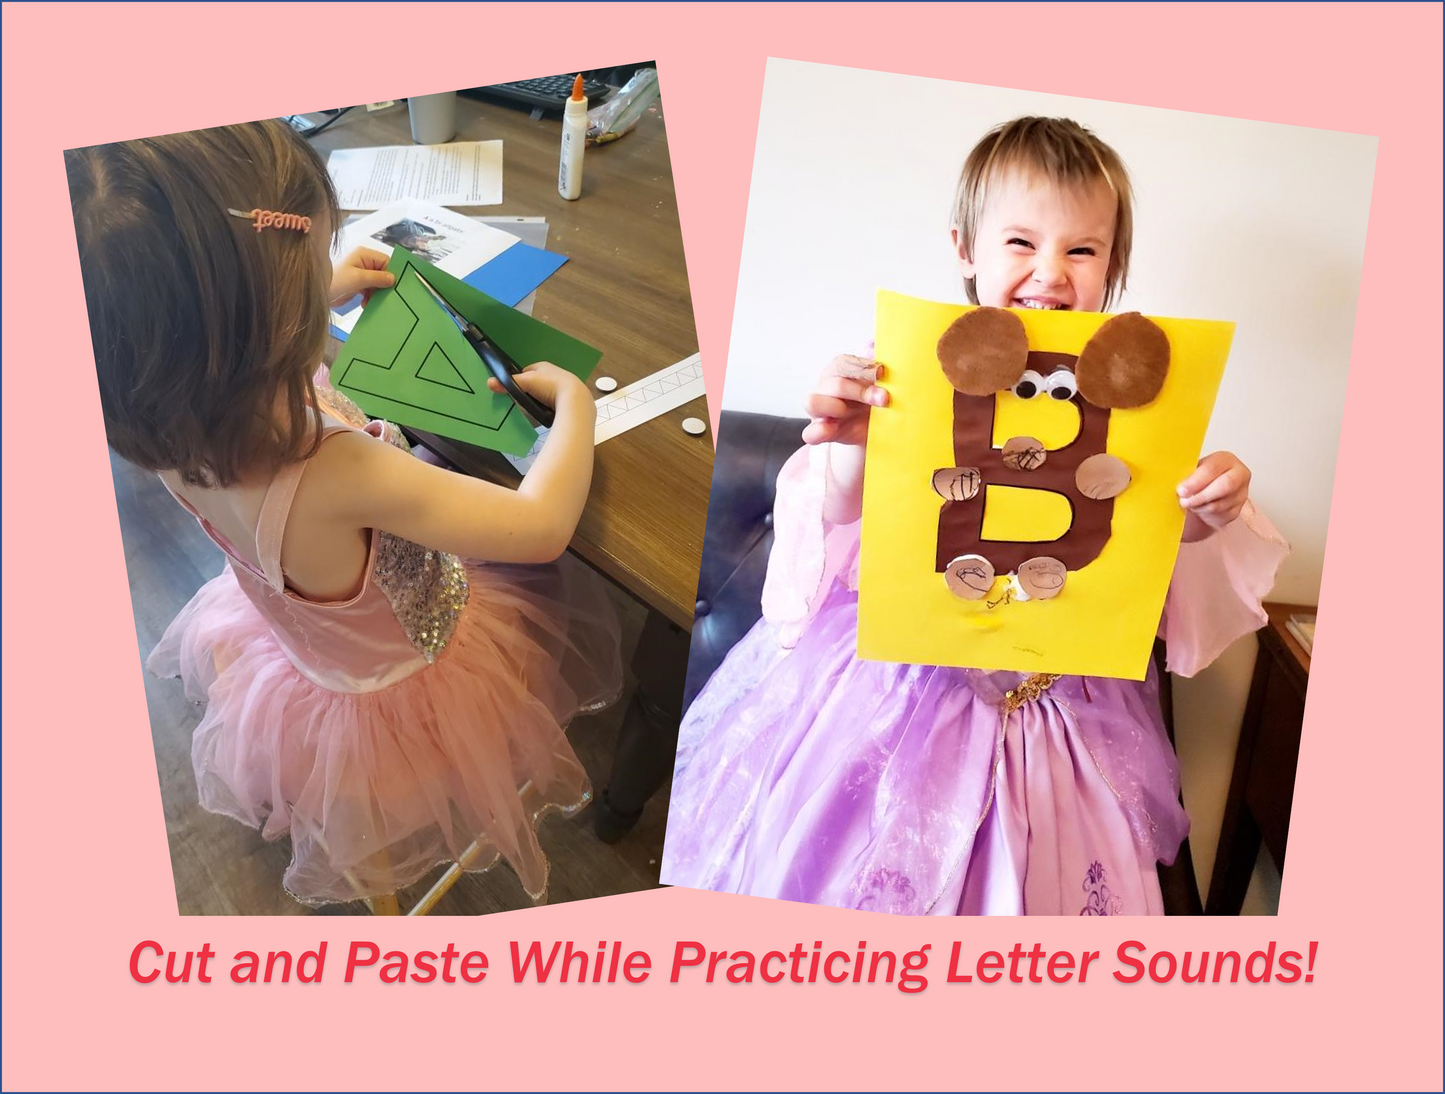 A-Z Animal Letter Crafts Kit - Alphabet Book Binder - Cut and Paste Phonics Activity